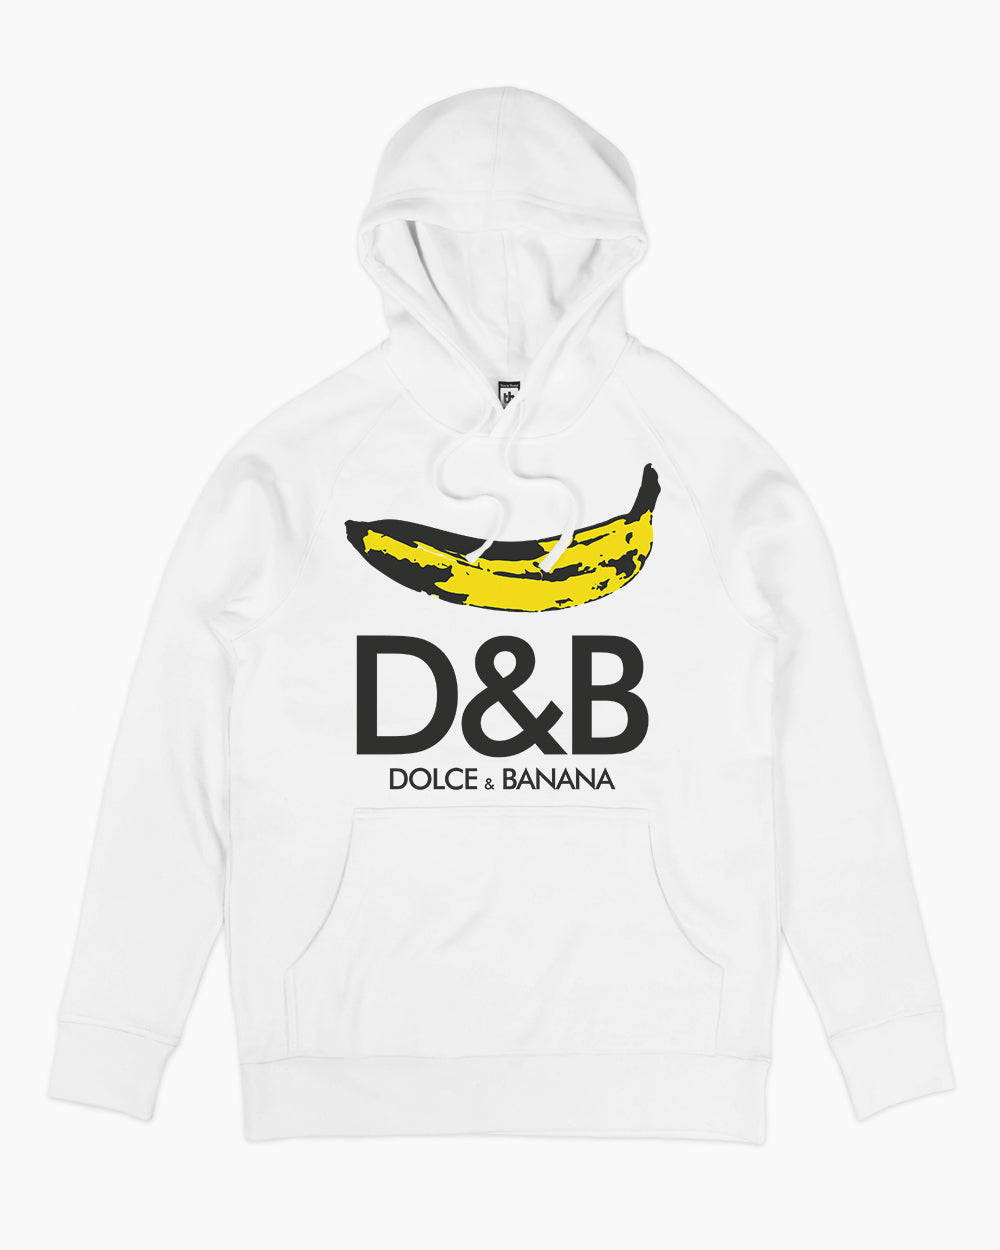 Dolce & Banana Hoodie Australia Online #colour_white